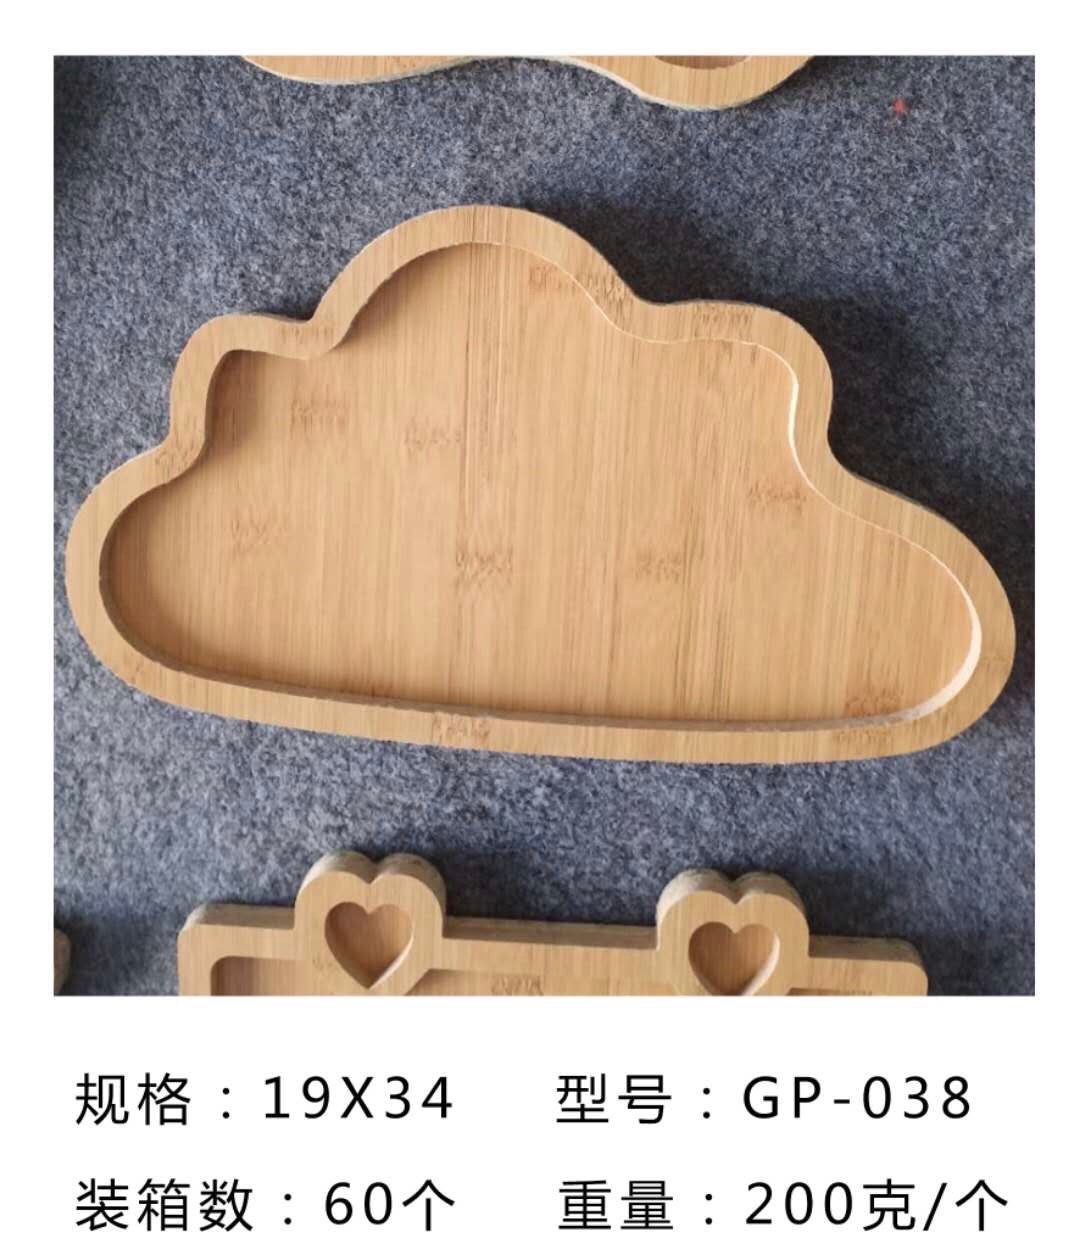 GP-038小云朵木质儿童餐具工艺品竹木水果盘创意可爱点心托盘子详情图1